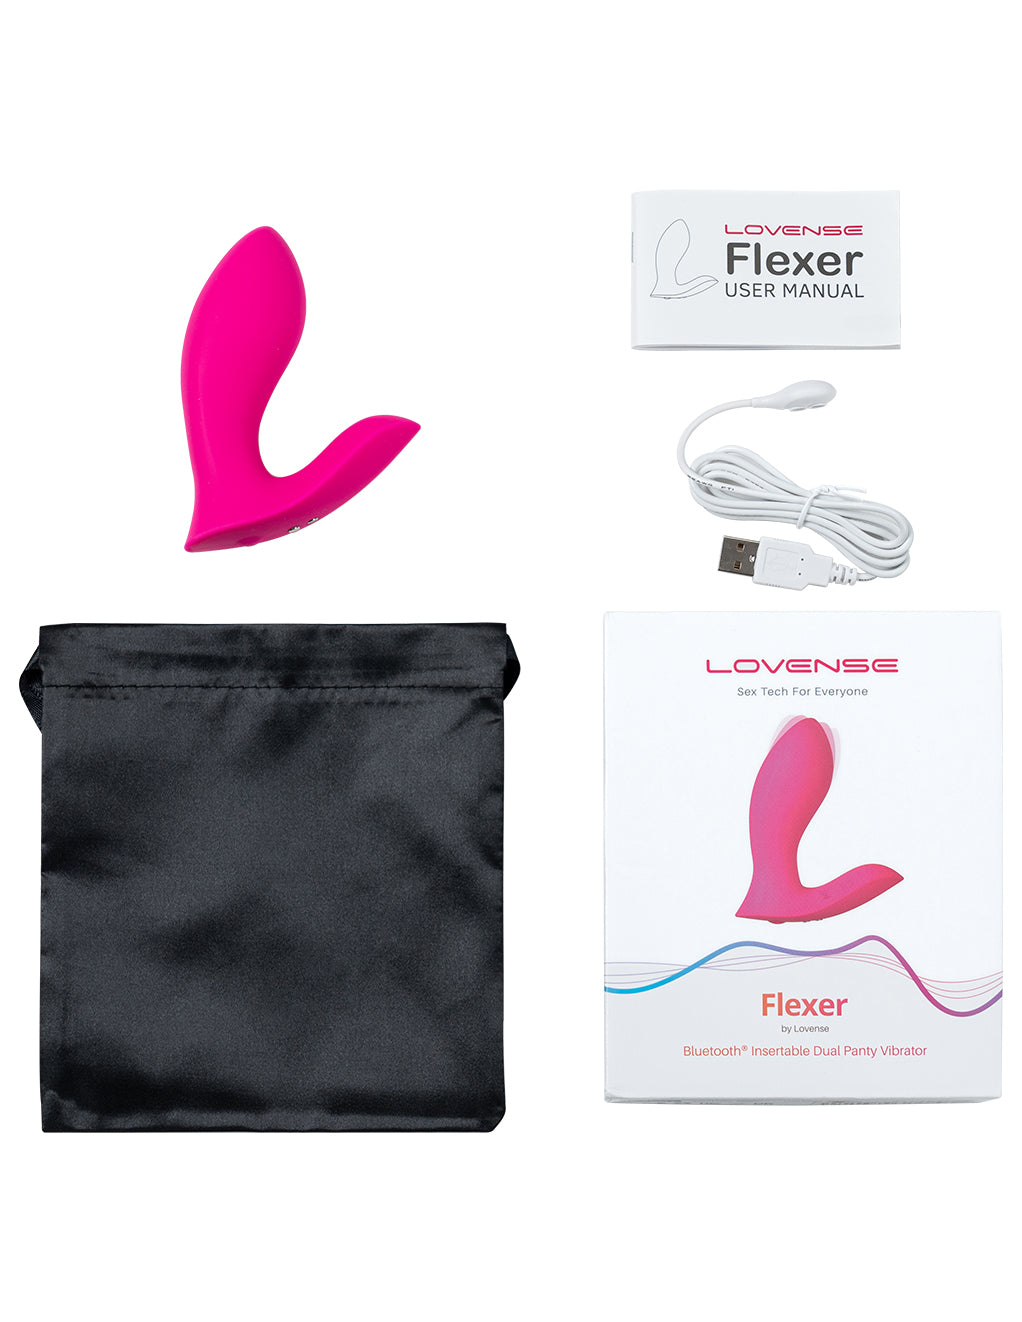 Lovense Flexer - Box Contents